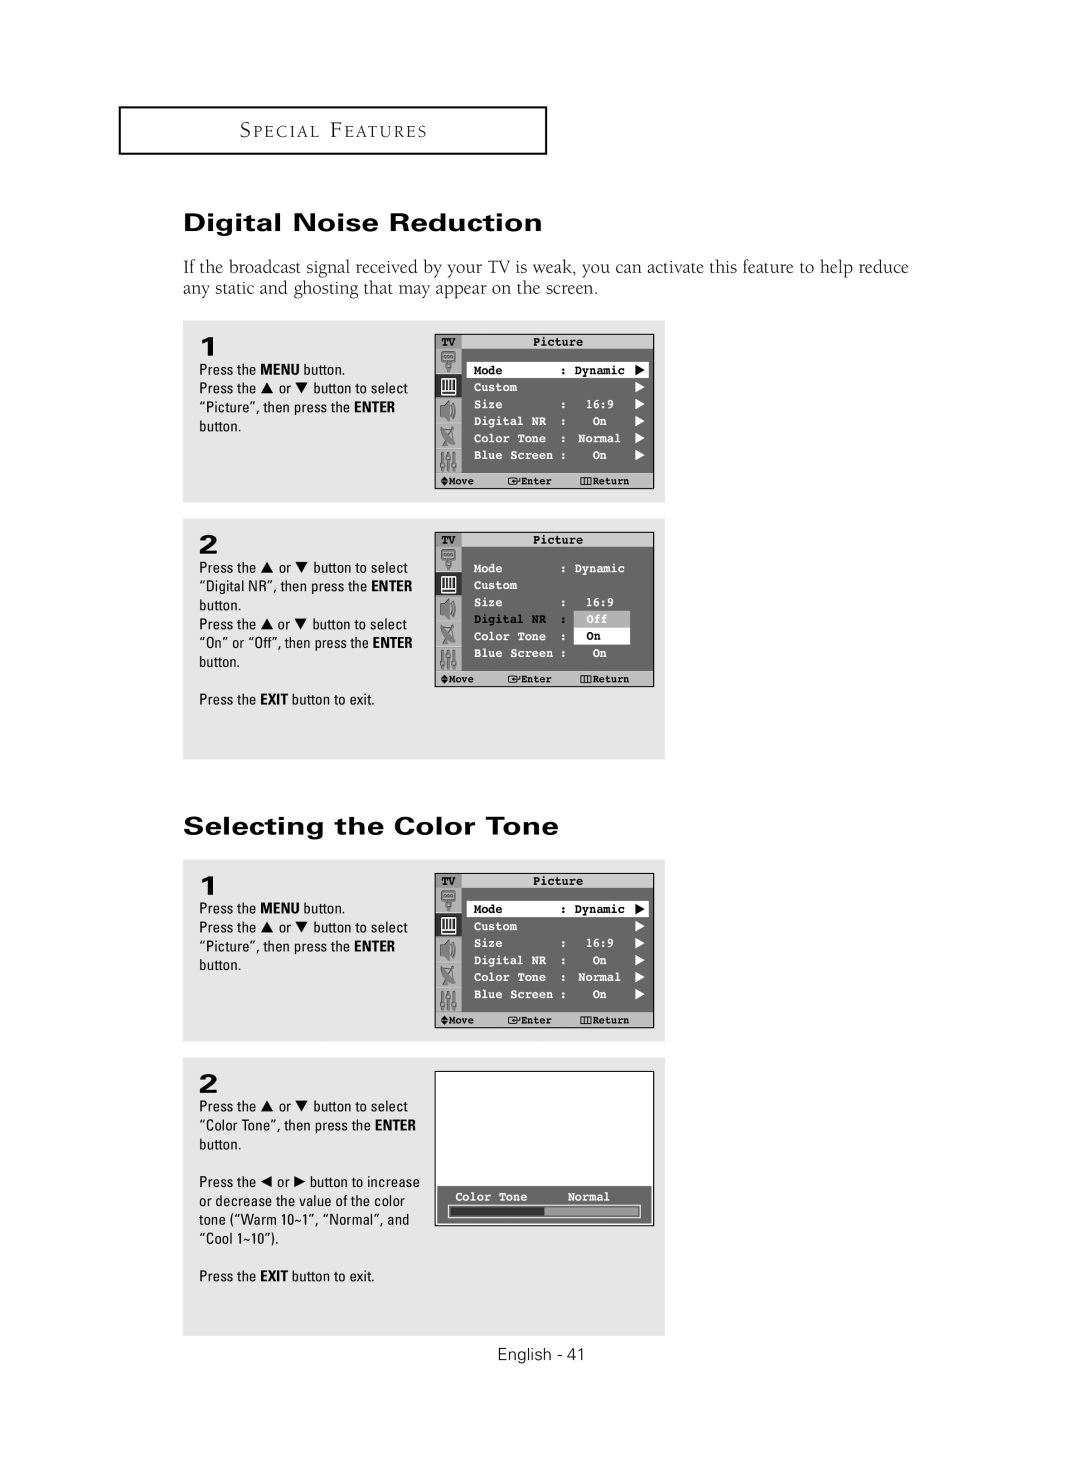 Samsung HC-P4241W Digital Noise Reduction, Selecting the Color Tone, S P E C I A L F E At U R E S, English, TV Picture 